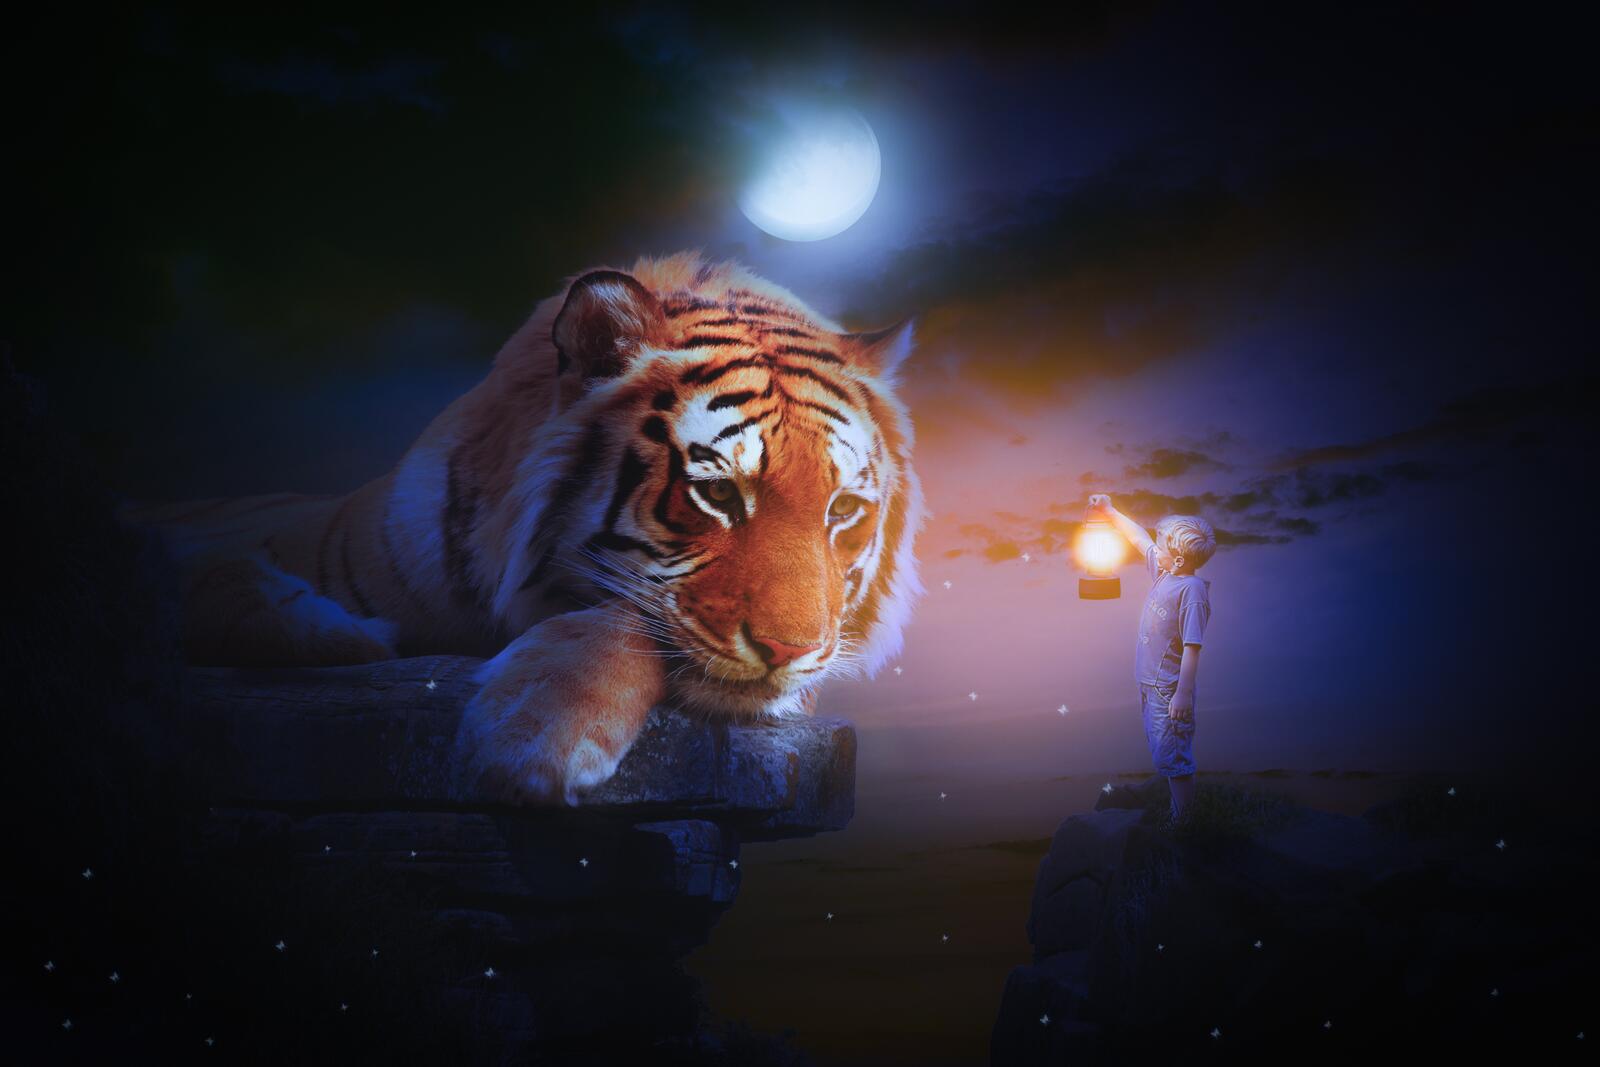 Wallpapers moonlight boy tiger on the desktop